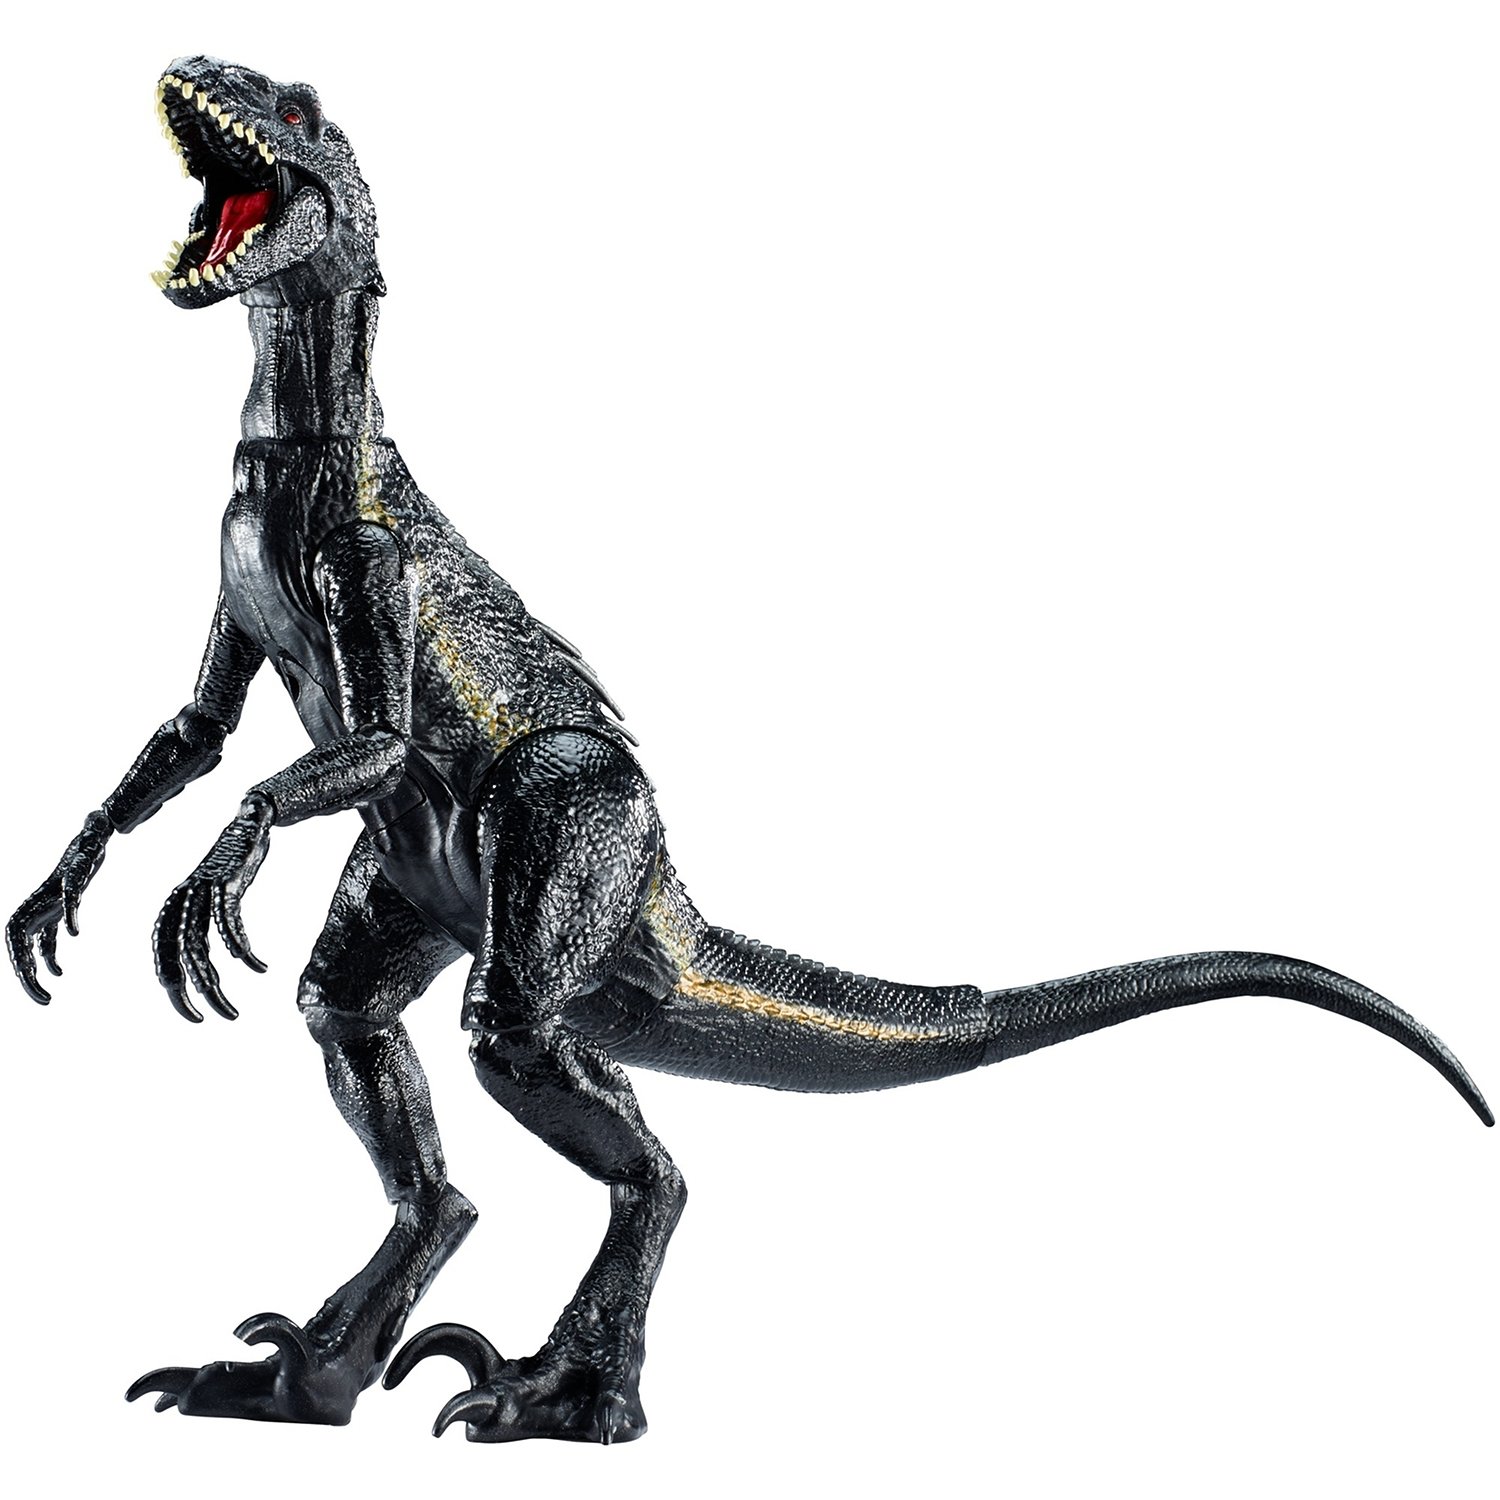 Динозавр из серии Jurassic World® - Индораптор  